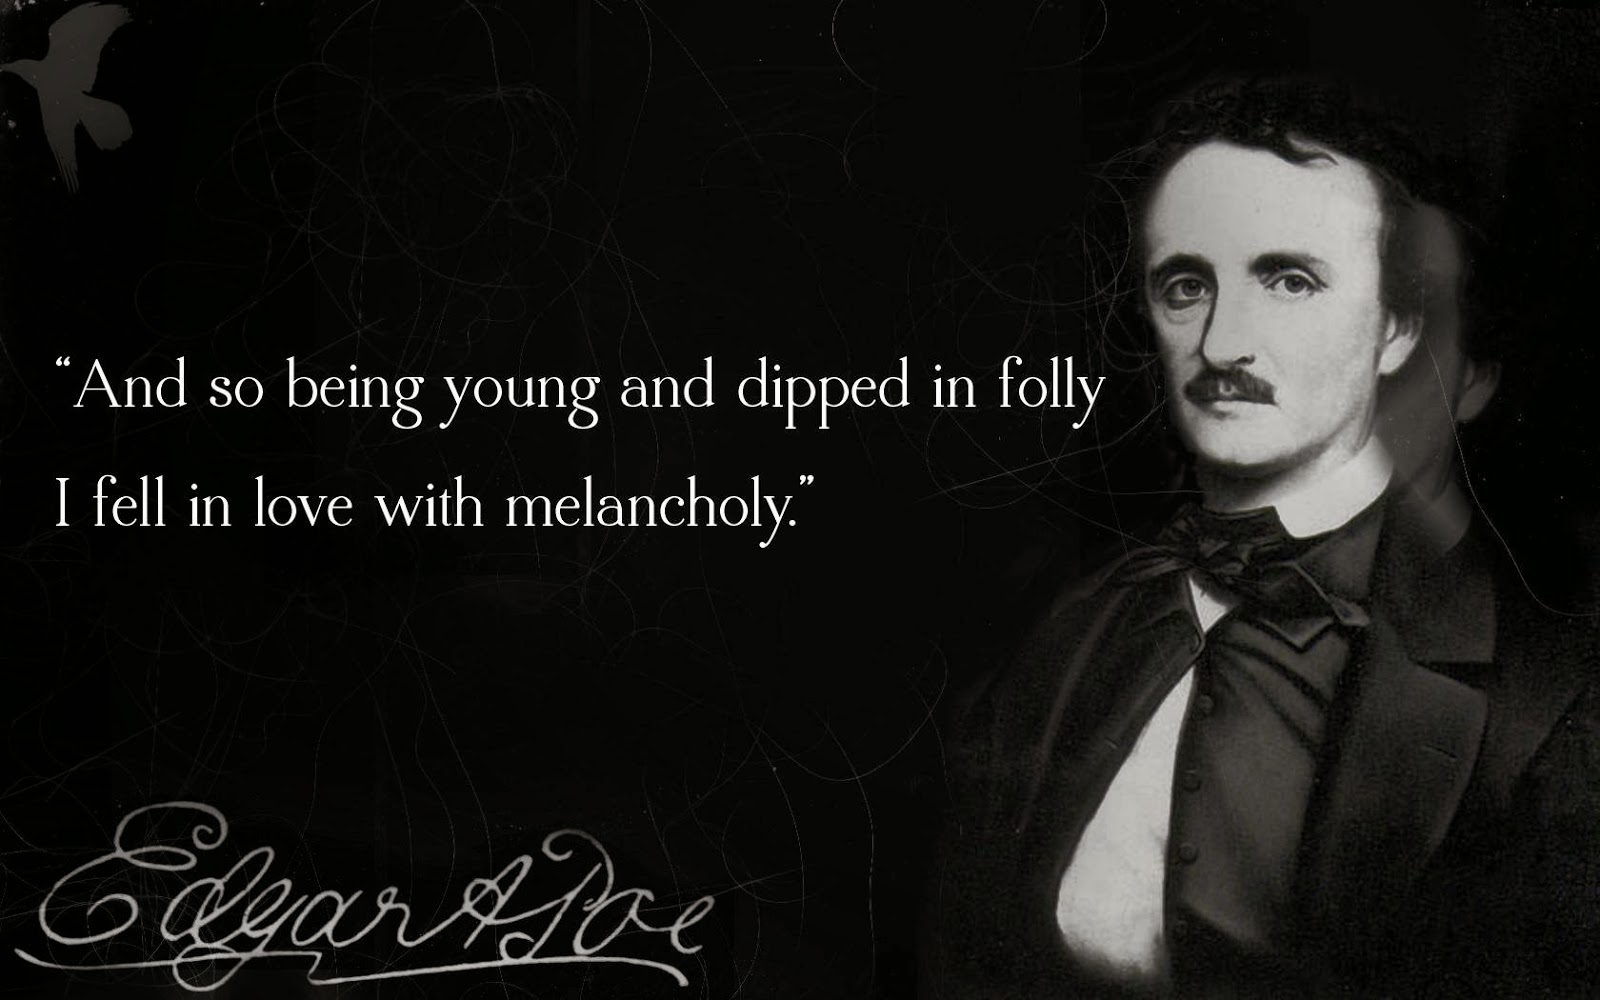 Edgar Allan Poe Quotes About Life. QuotesGram